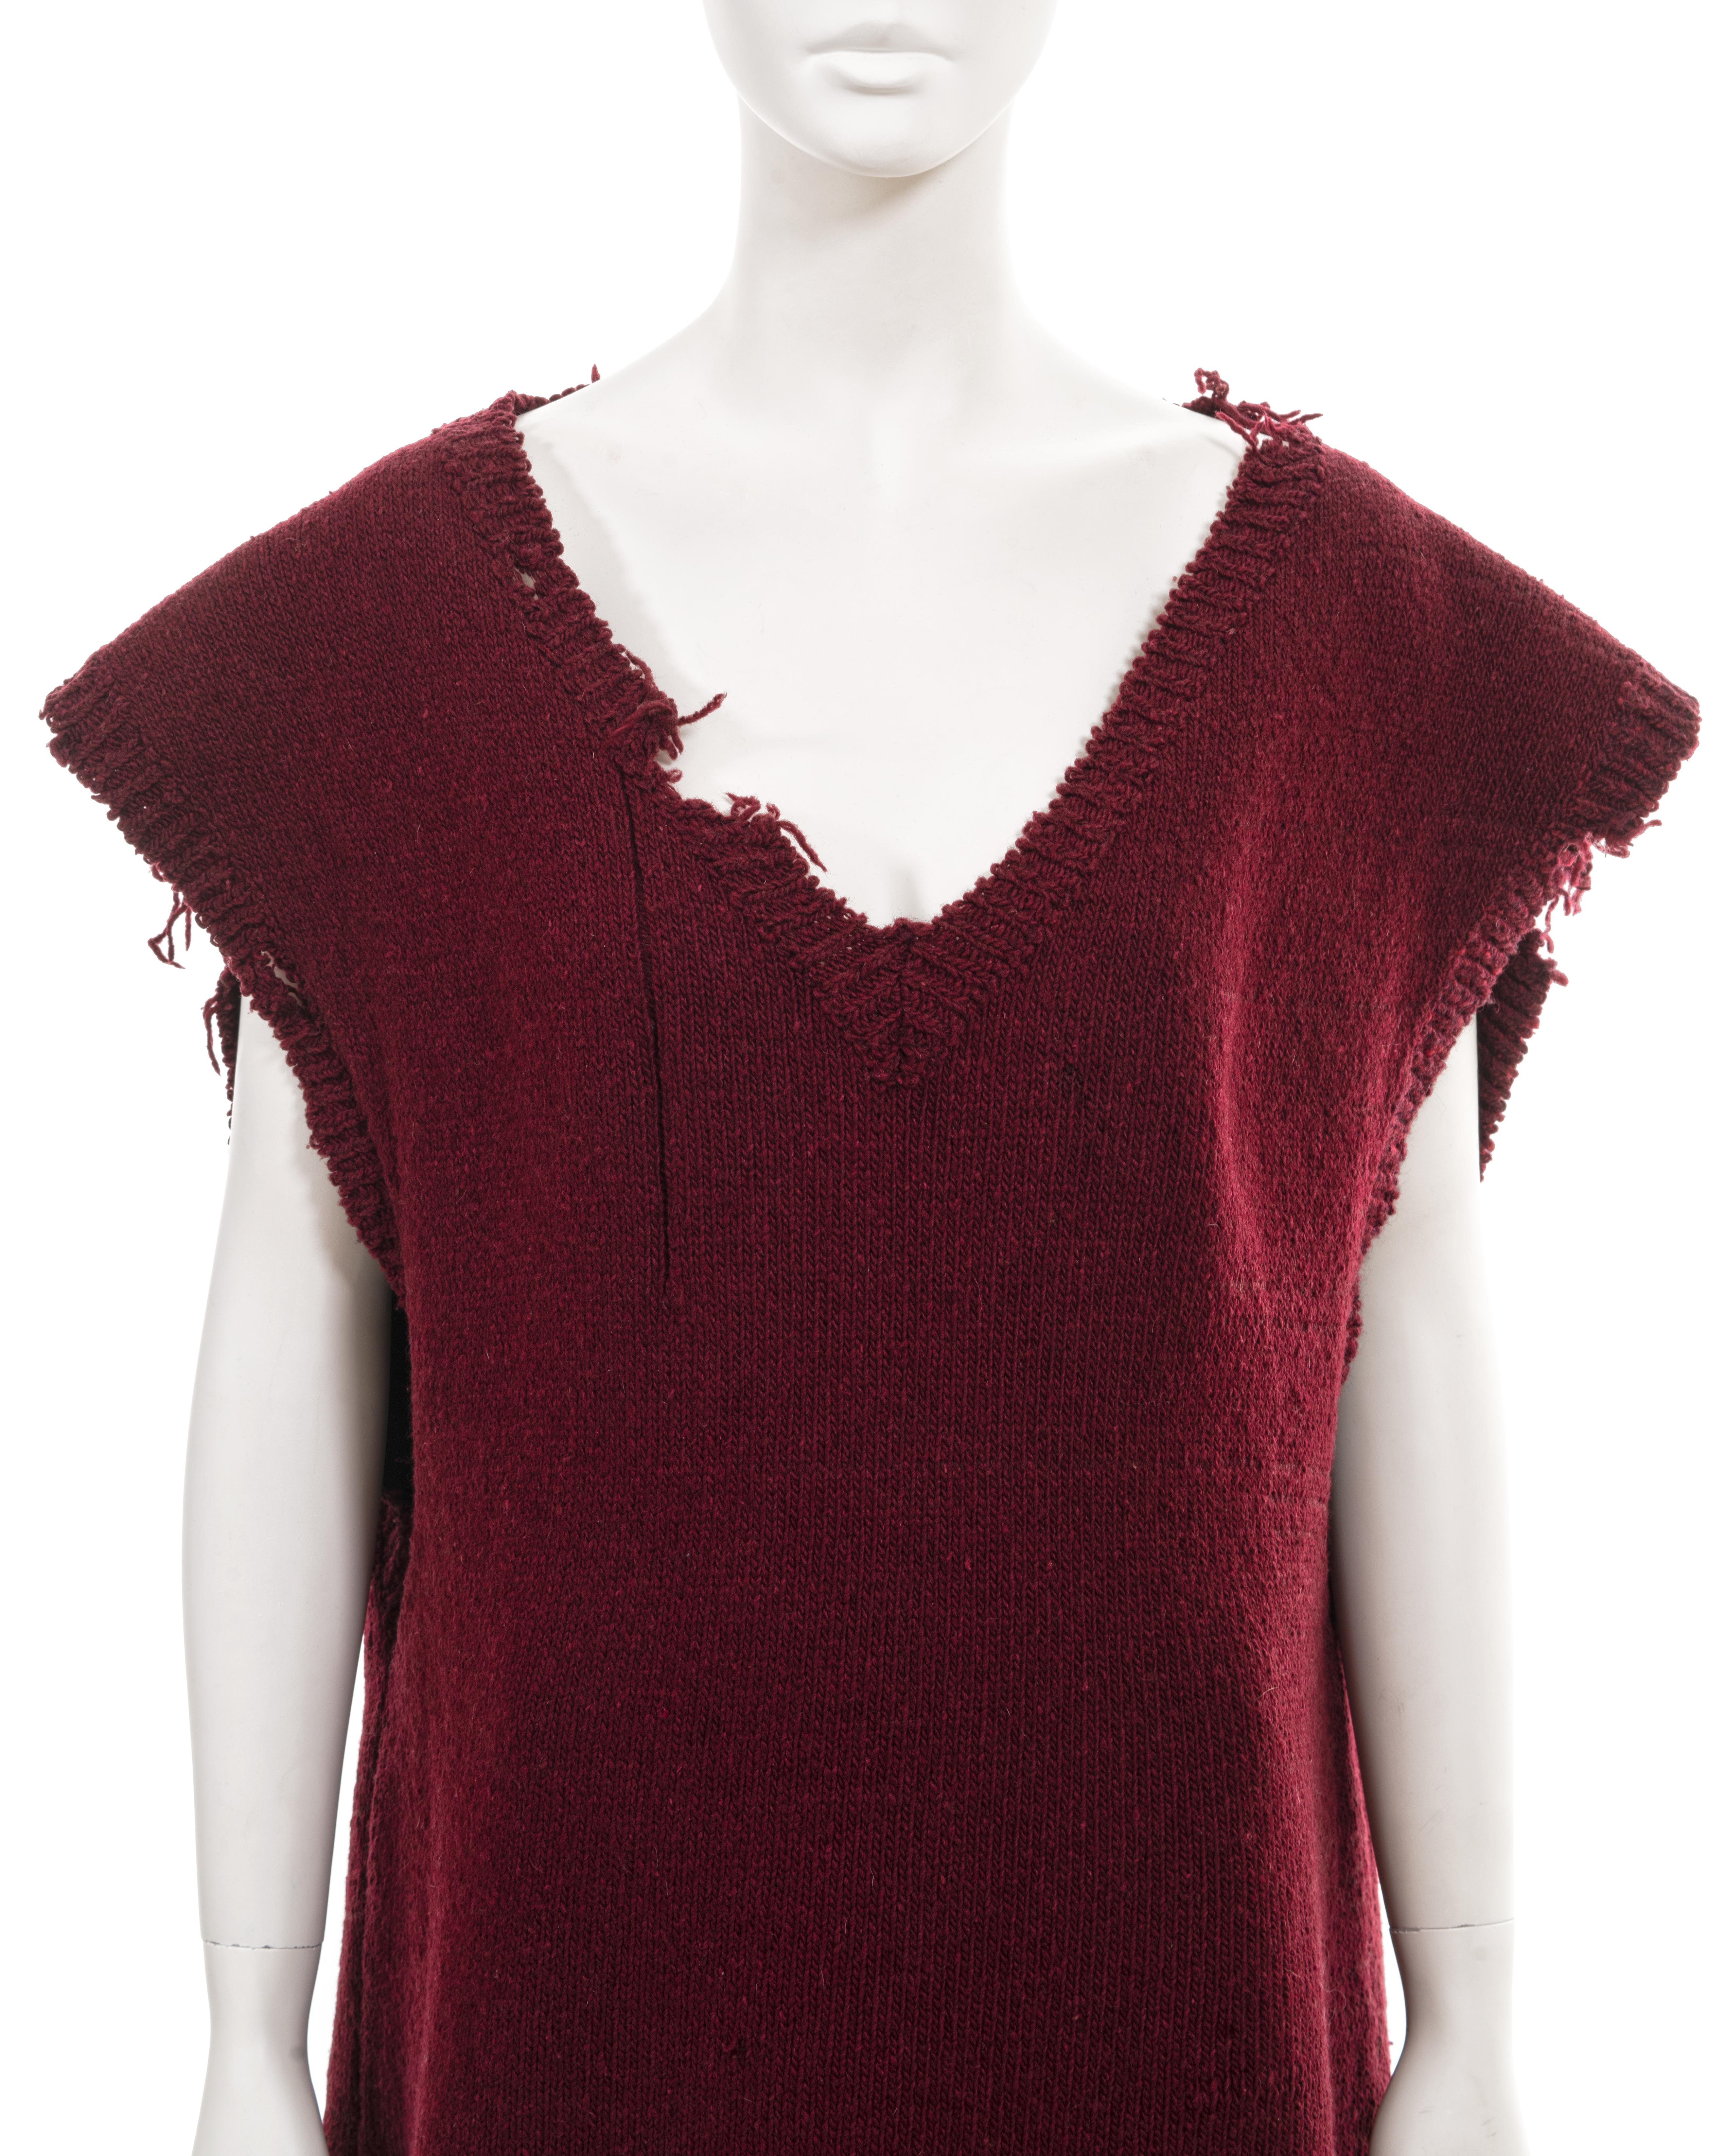 Martin Margiela oversized destroyed burgundy knitted sweater vest, fw 2000 For Sale 1